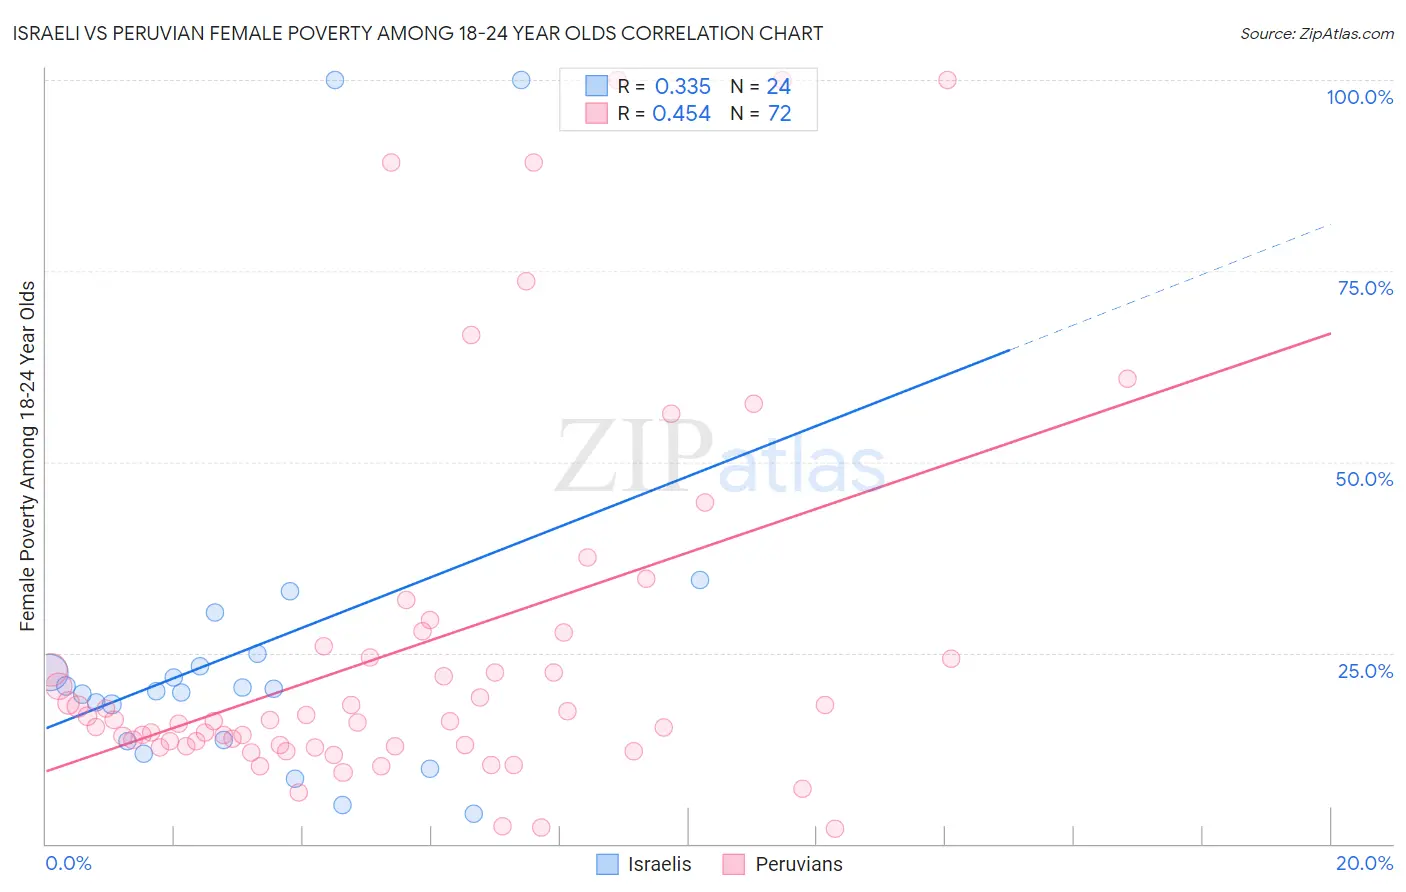 Israeli vs Peruvian Female Poverty Among 18-24 Year Olds